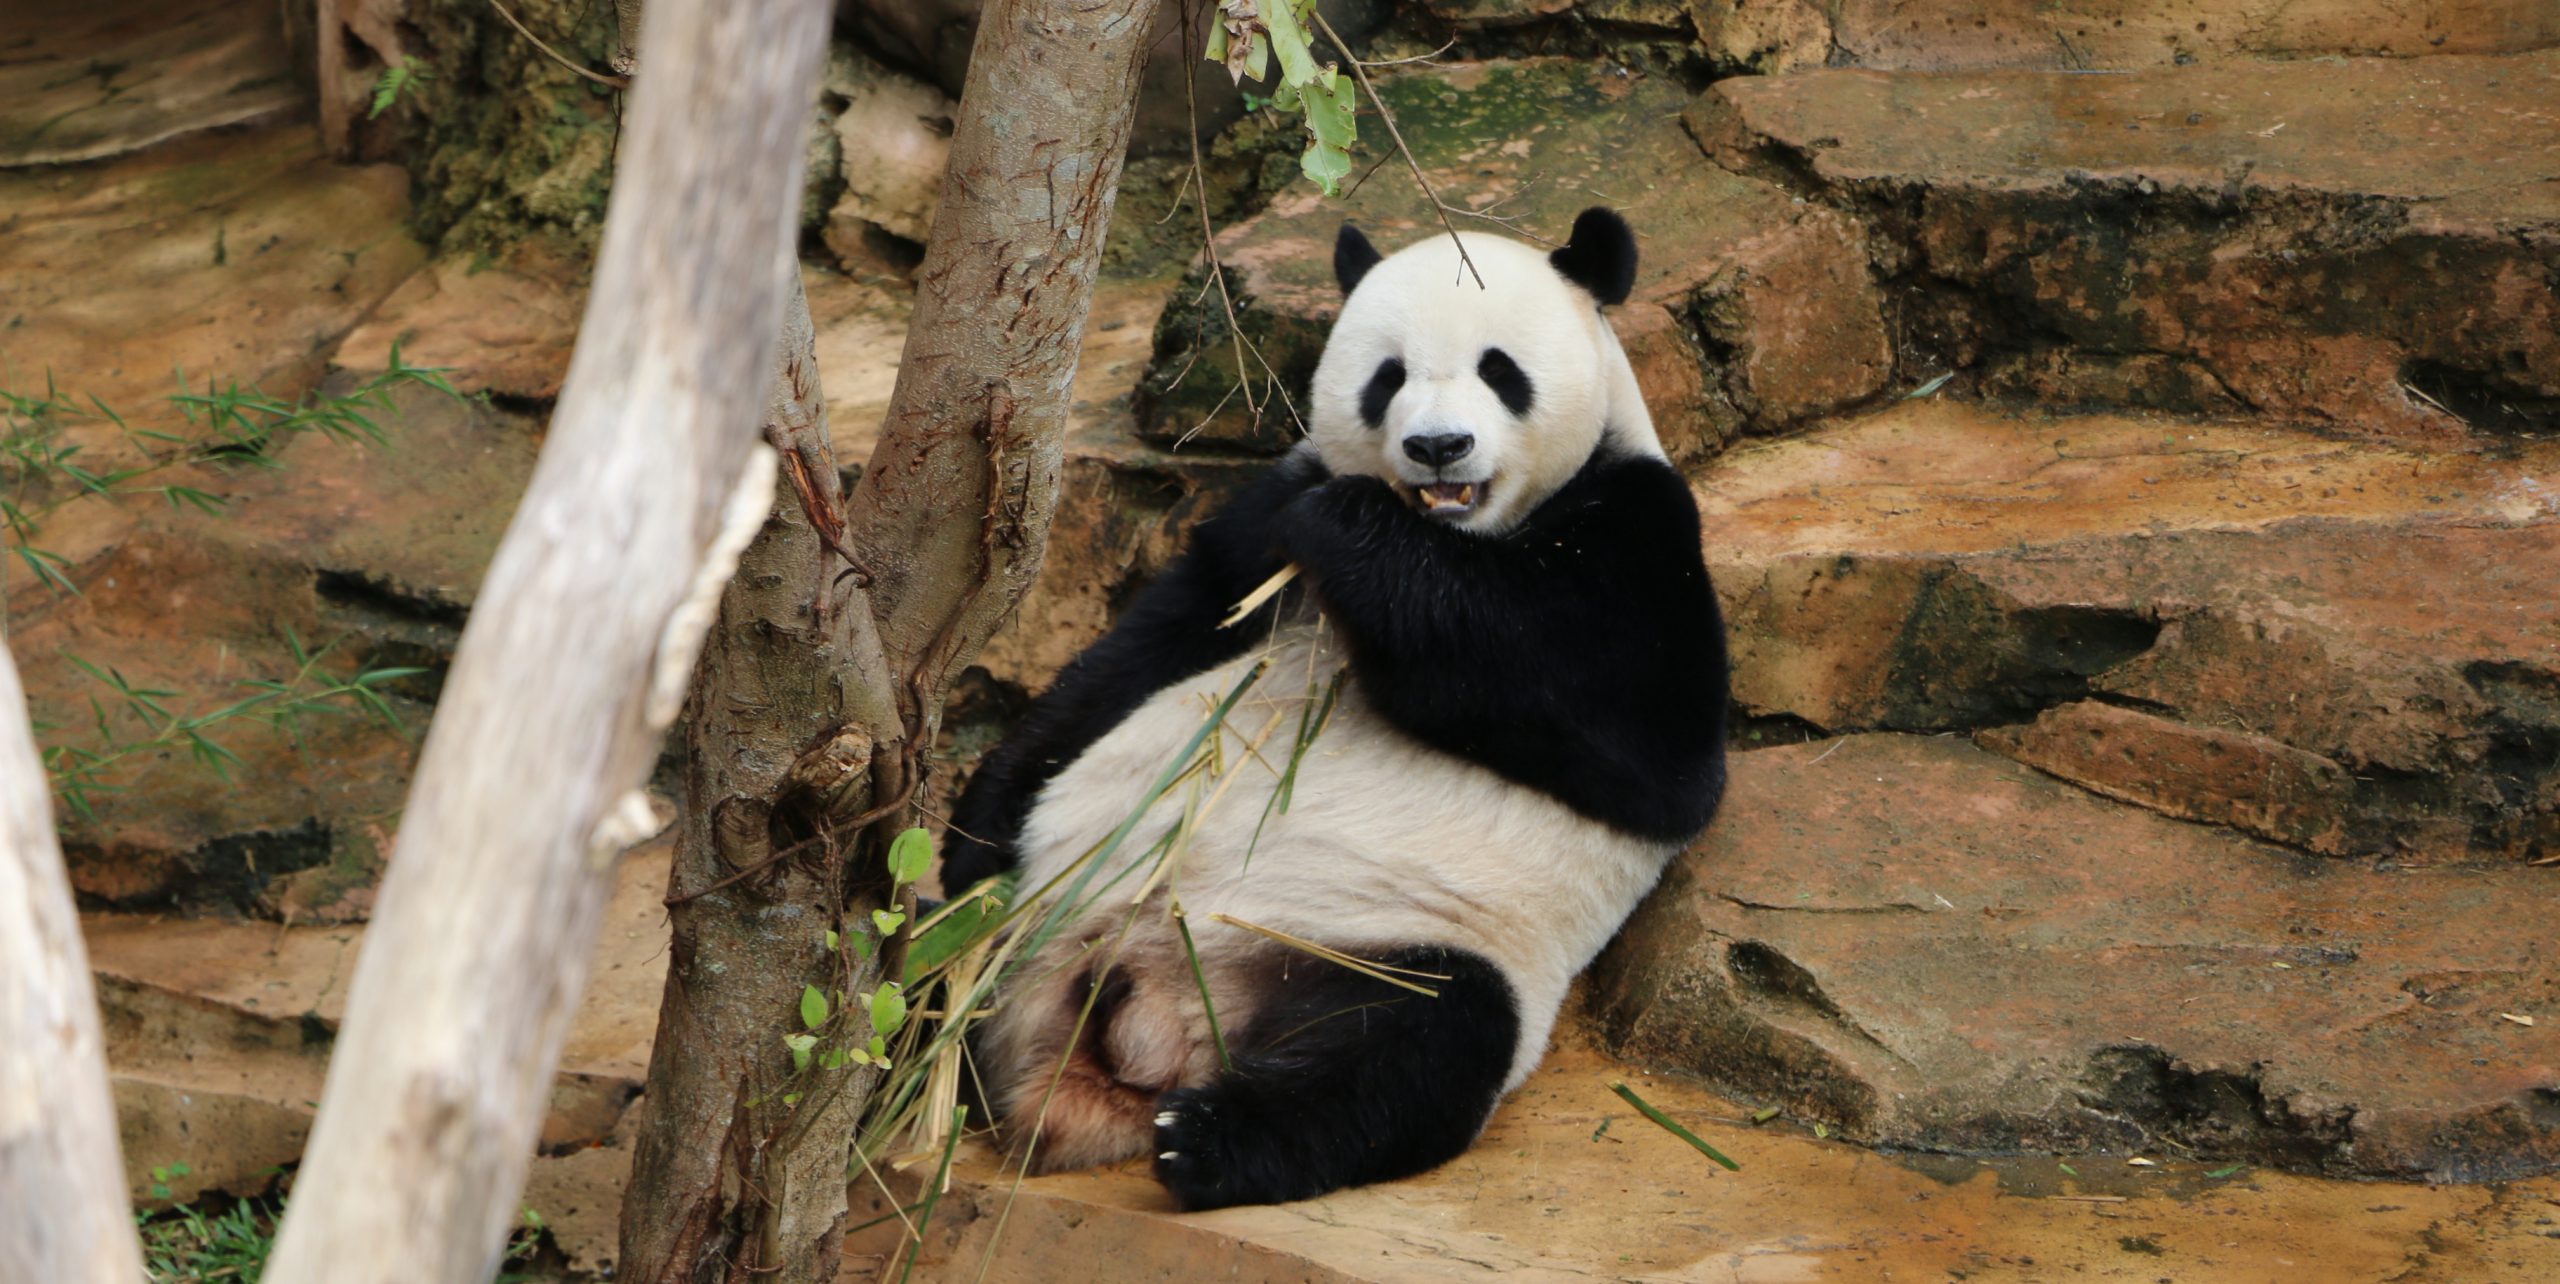 Diplomat pandalar ‘sarayda’ kalıyor